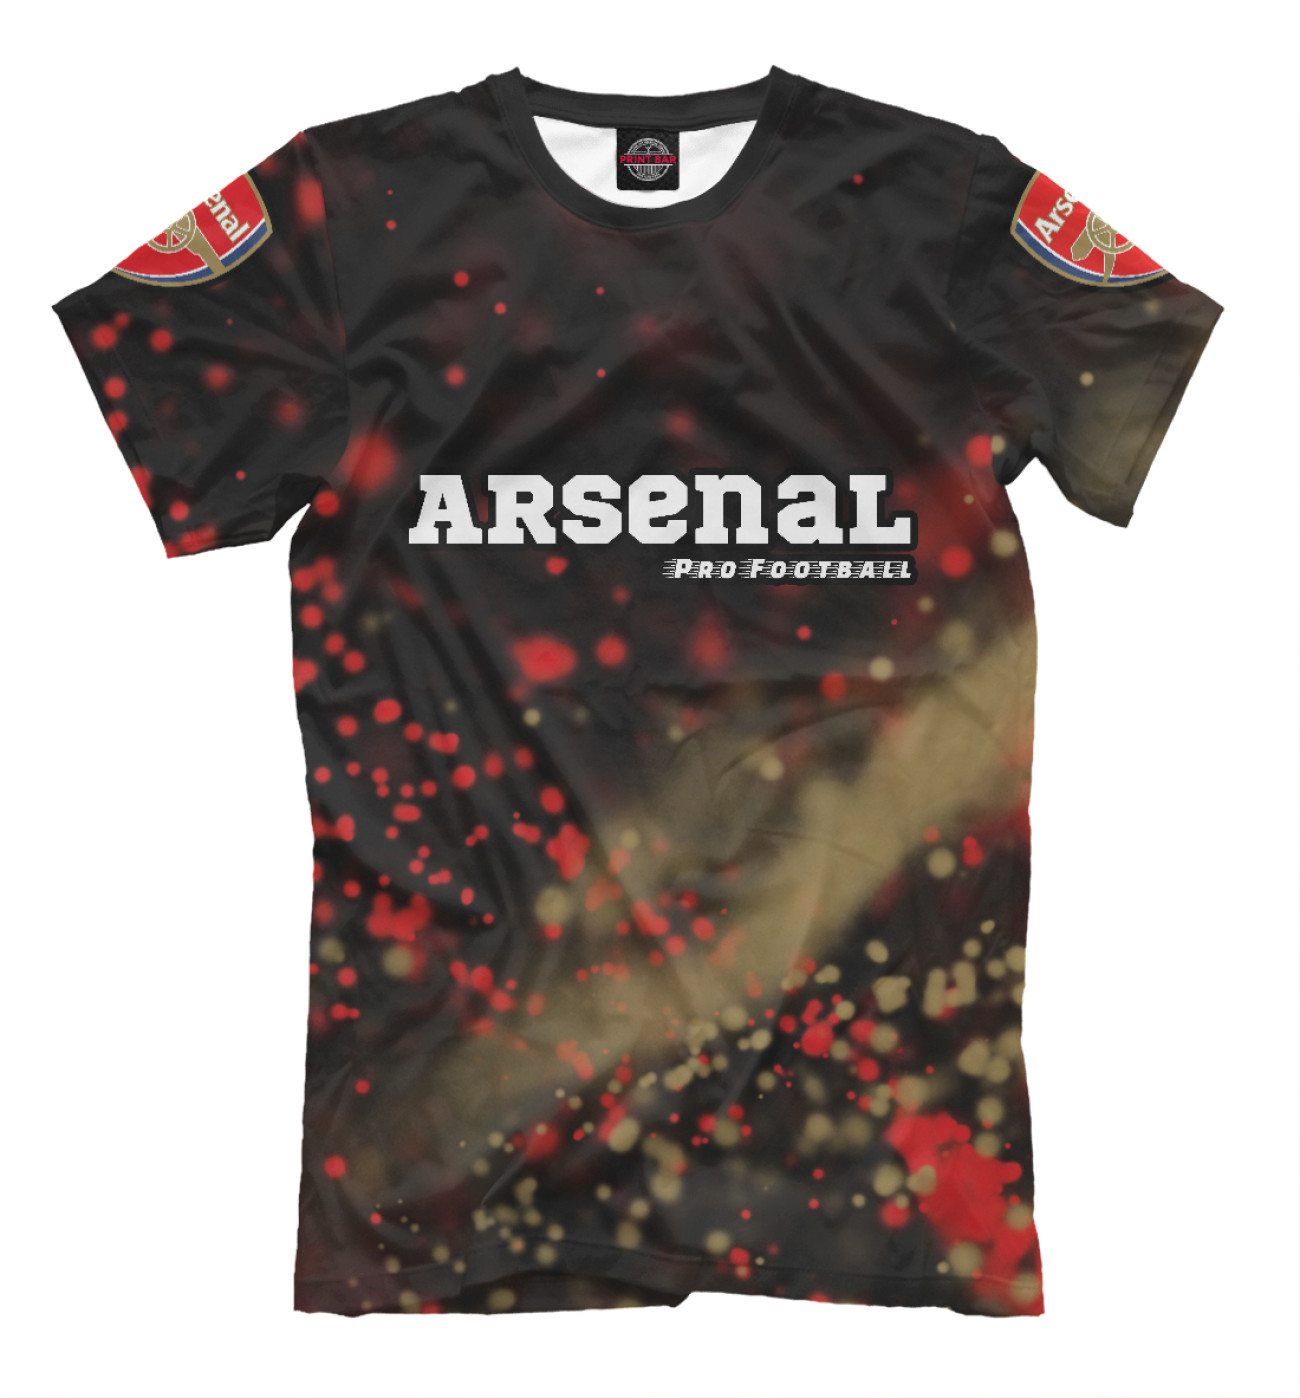 Мужская Футболка Arsenal | Arsenal Pro Football, артикул: ARS-477767-fut-2